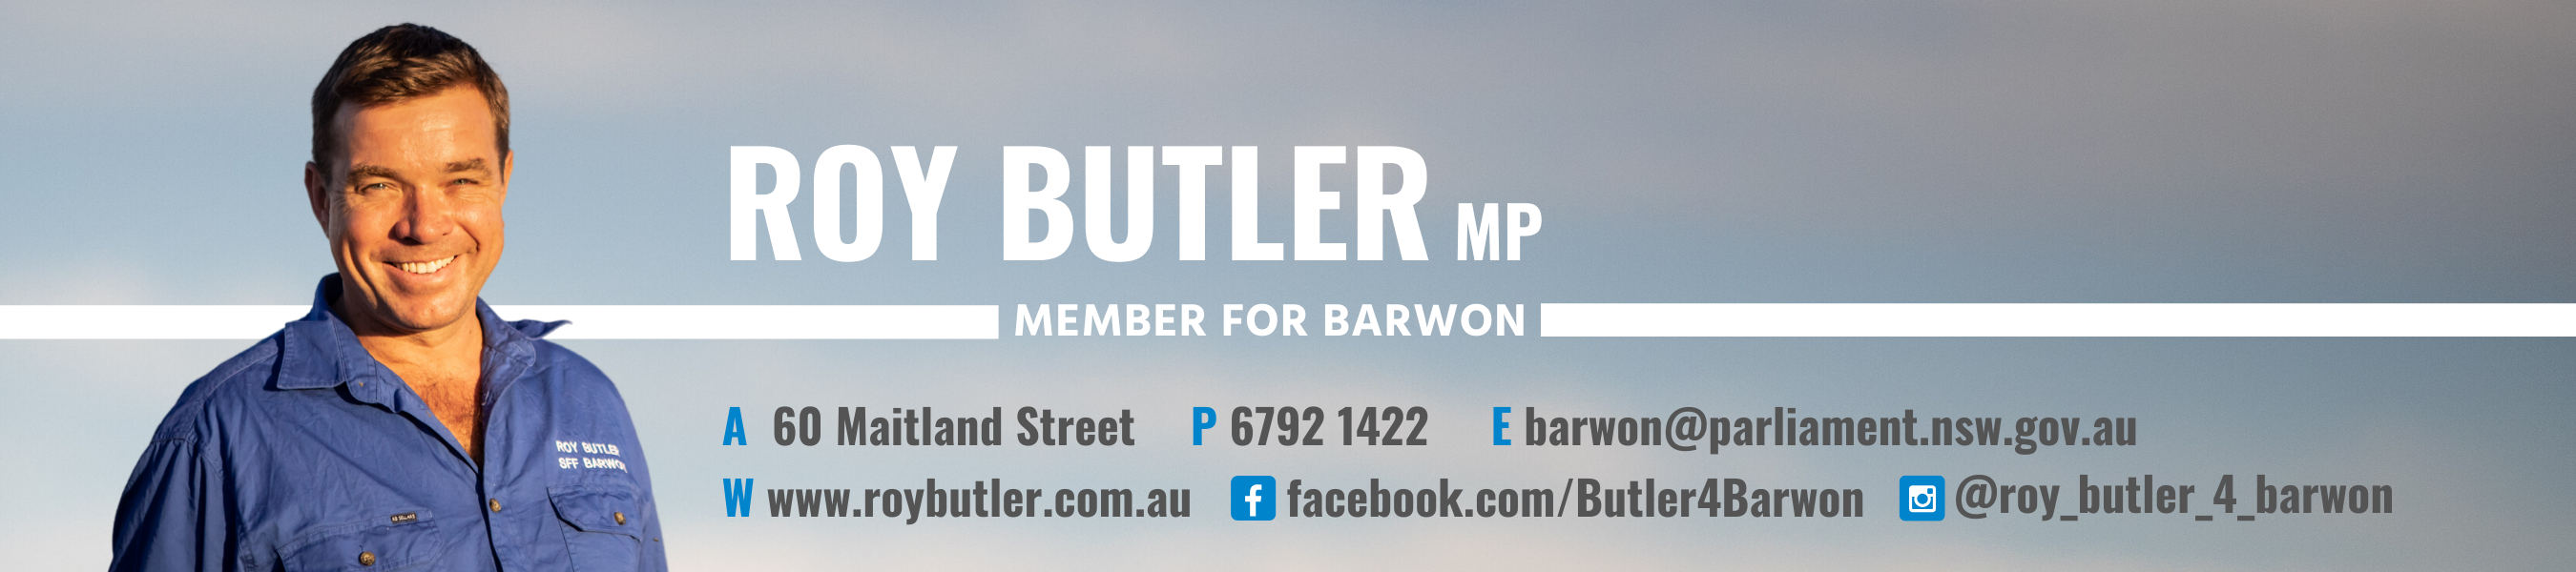 Roy Butler MP - Local Member